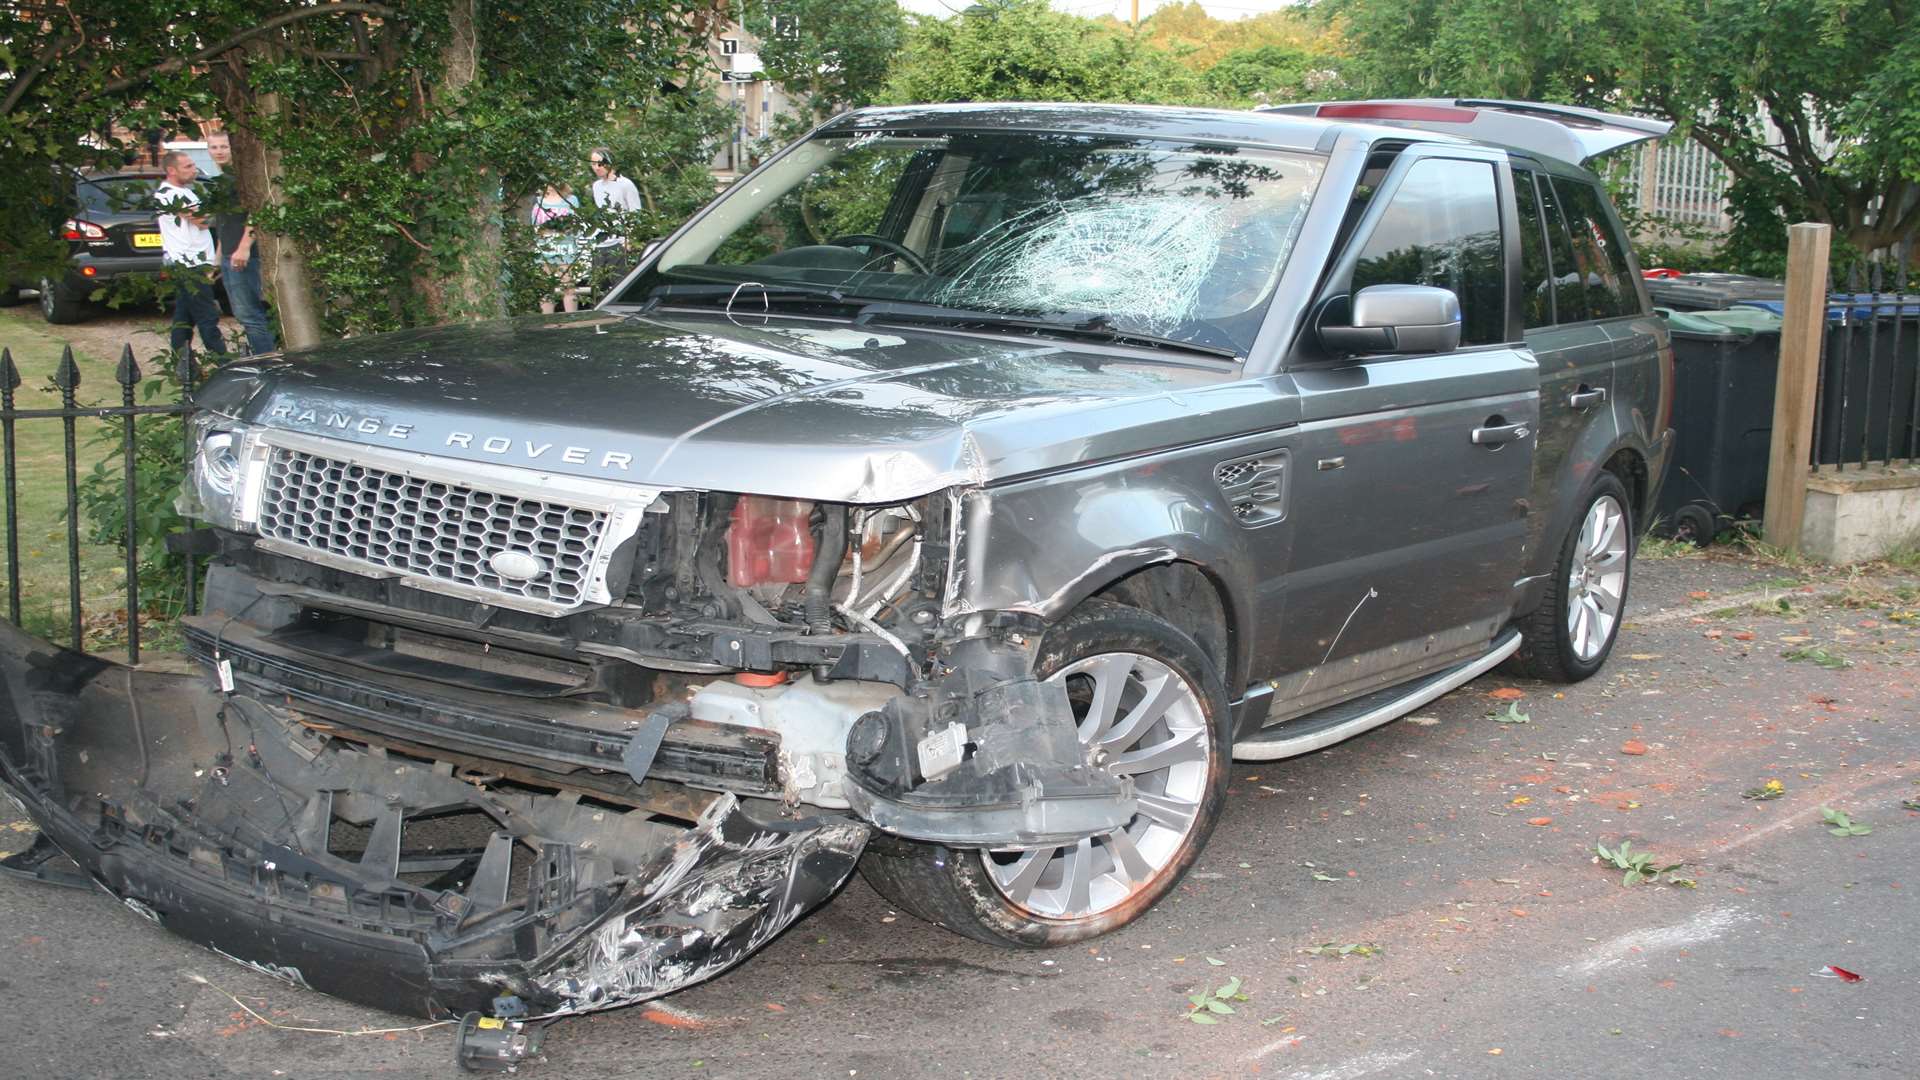 The damaged Range Rover after it crashed through crossing gates at Chartham. Photo: Neil Webber